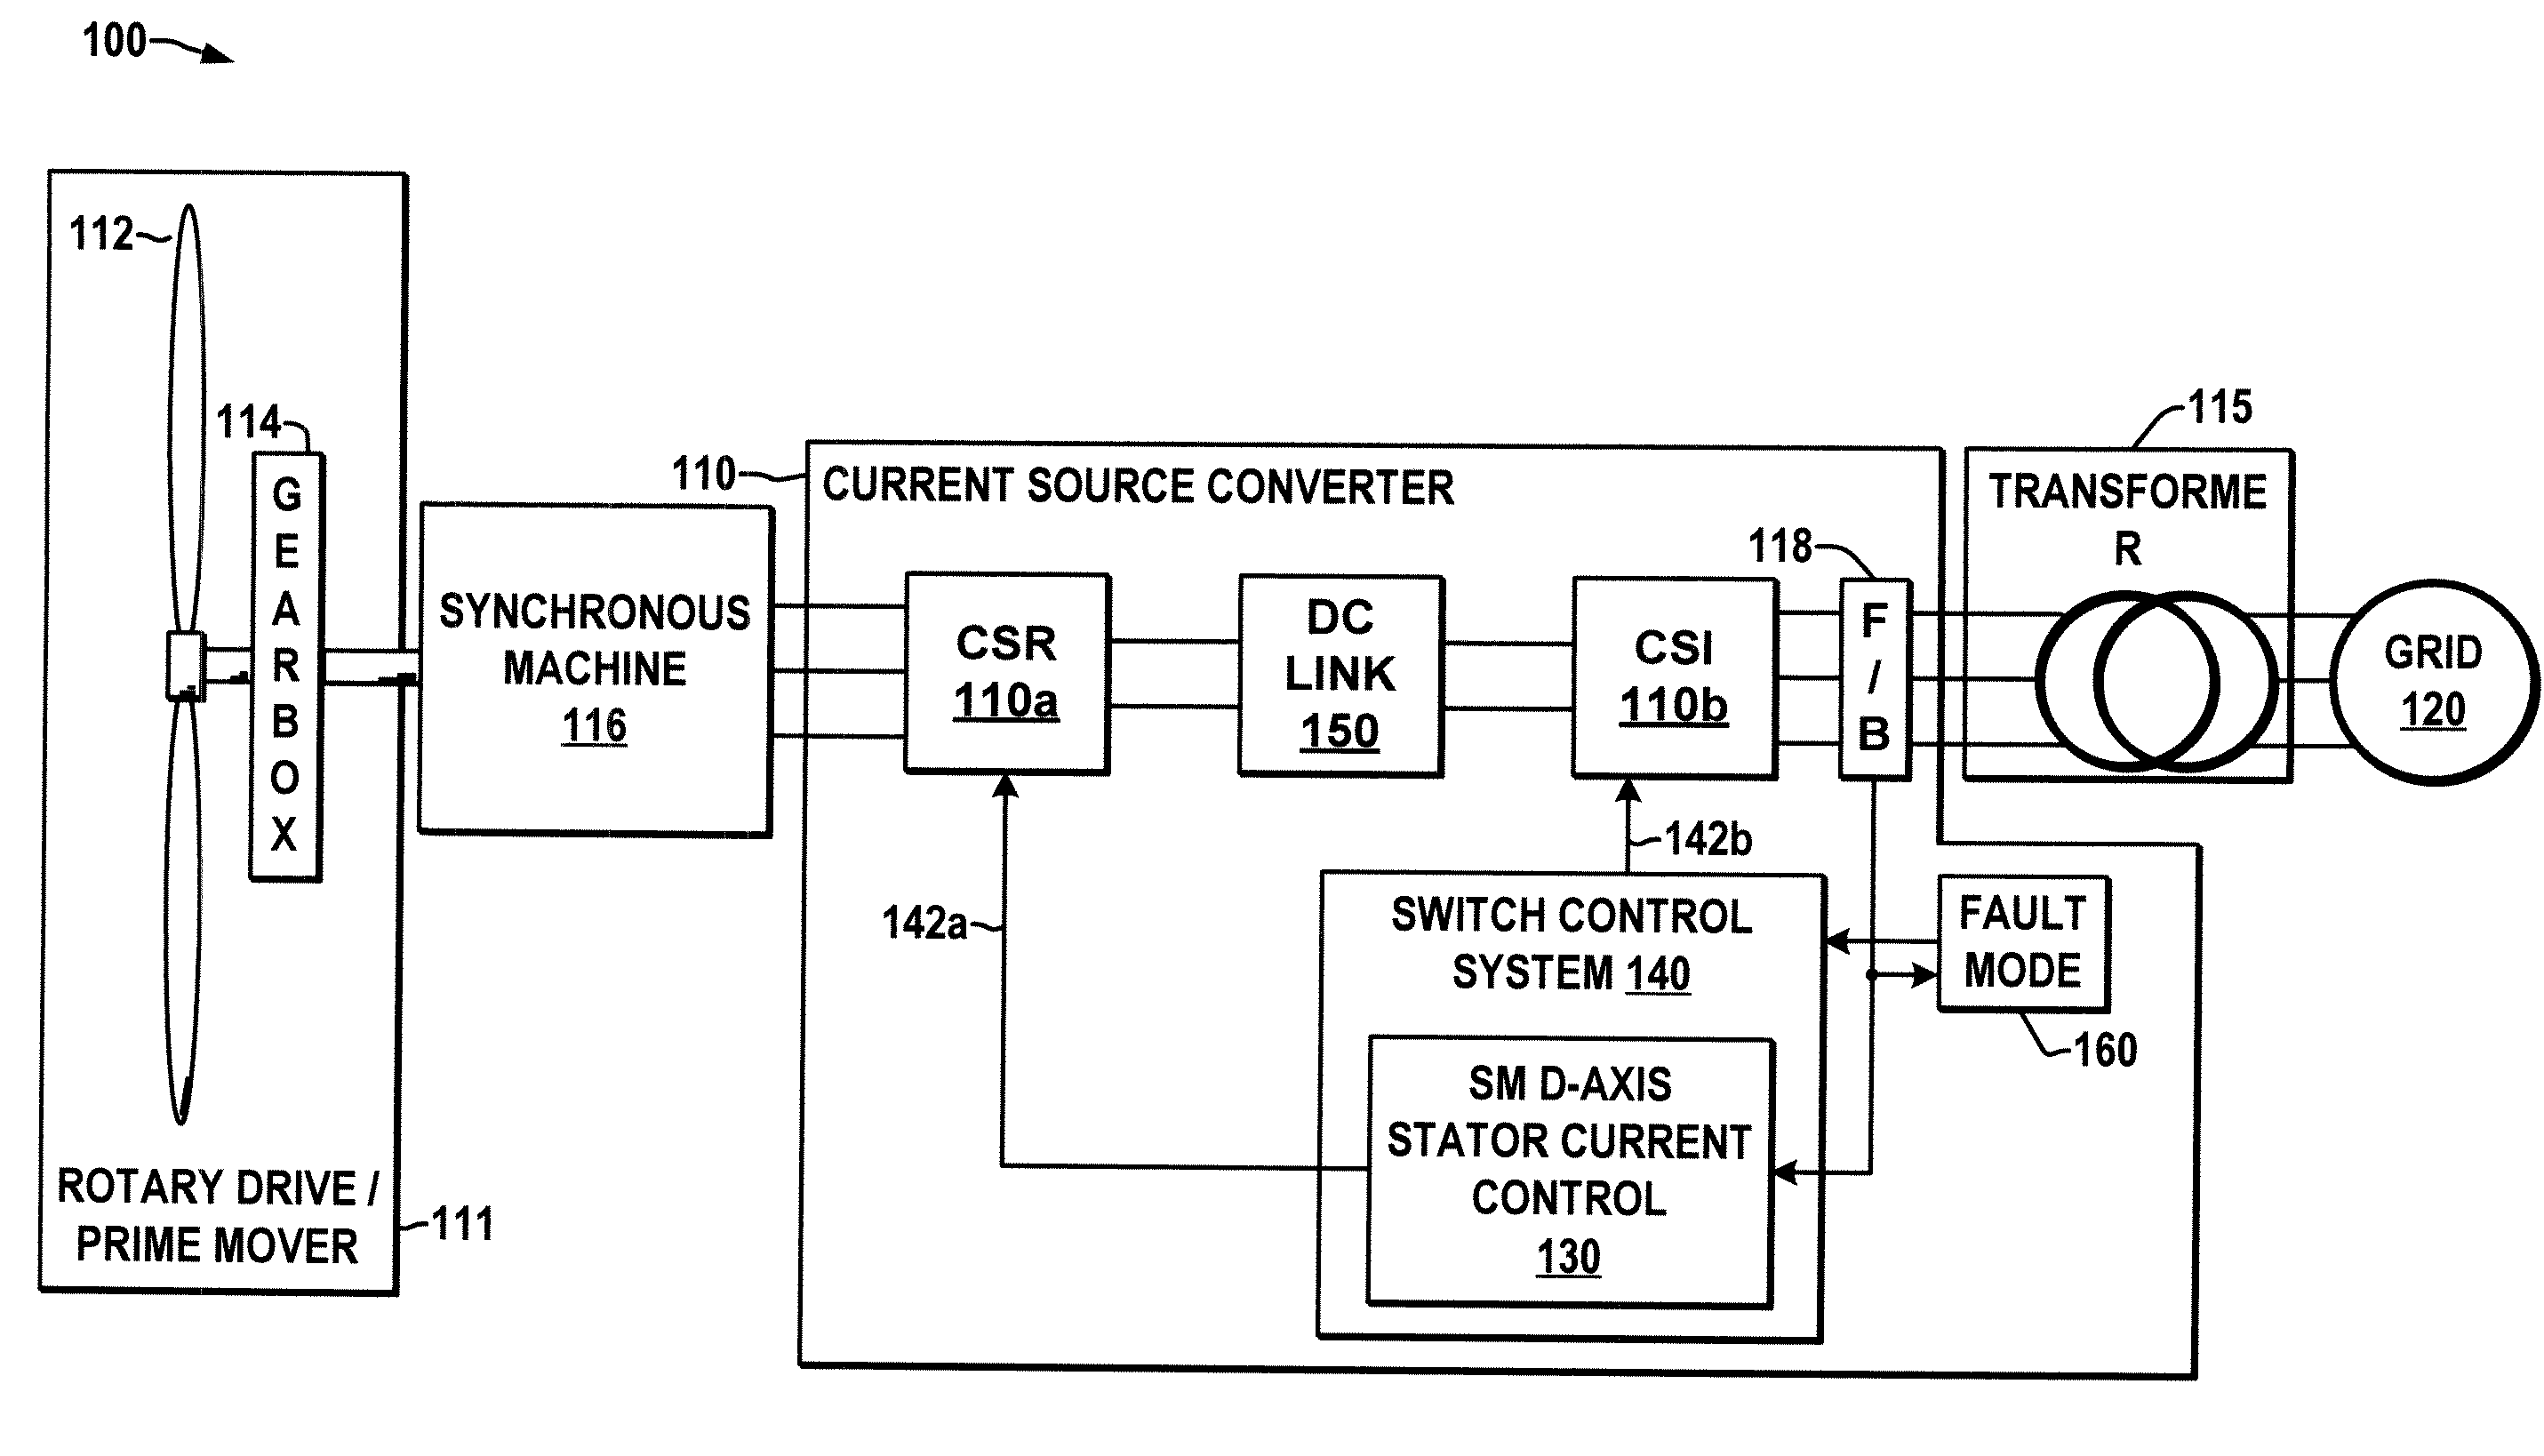 Current source converter-based wind energy system